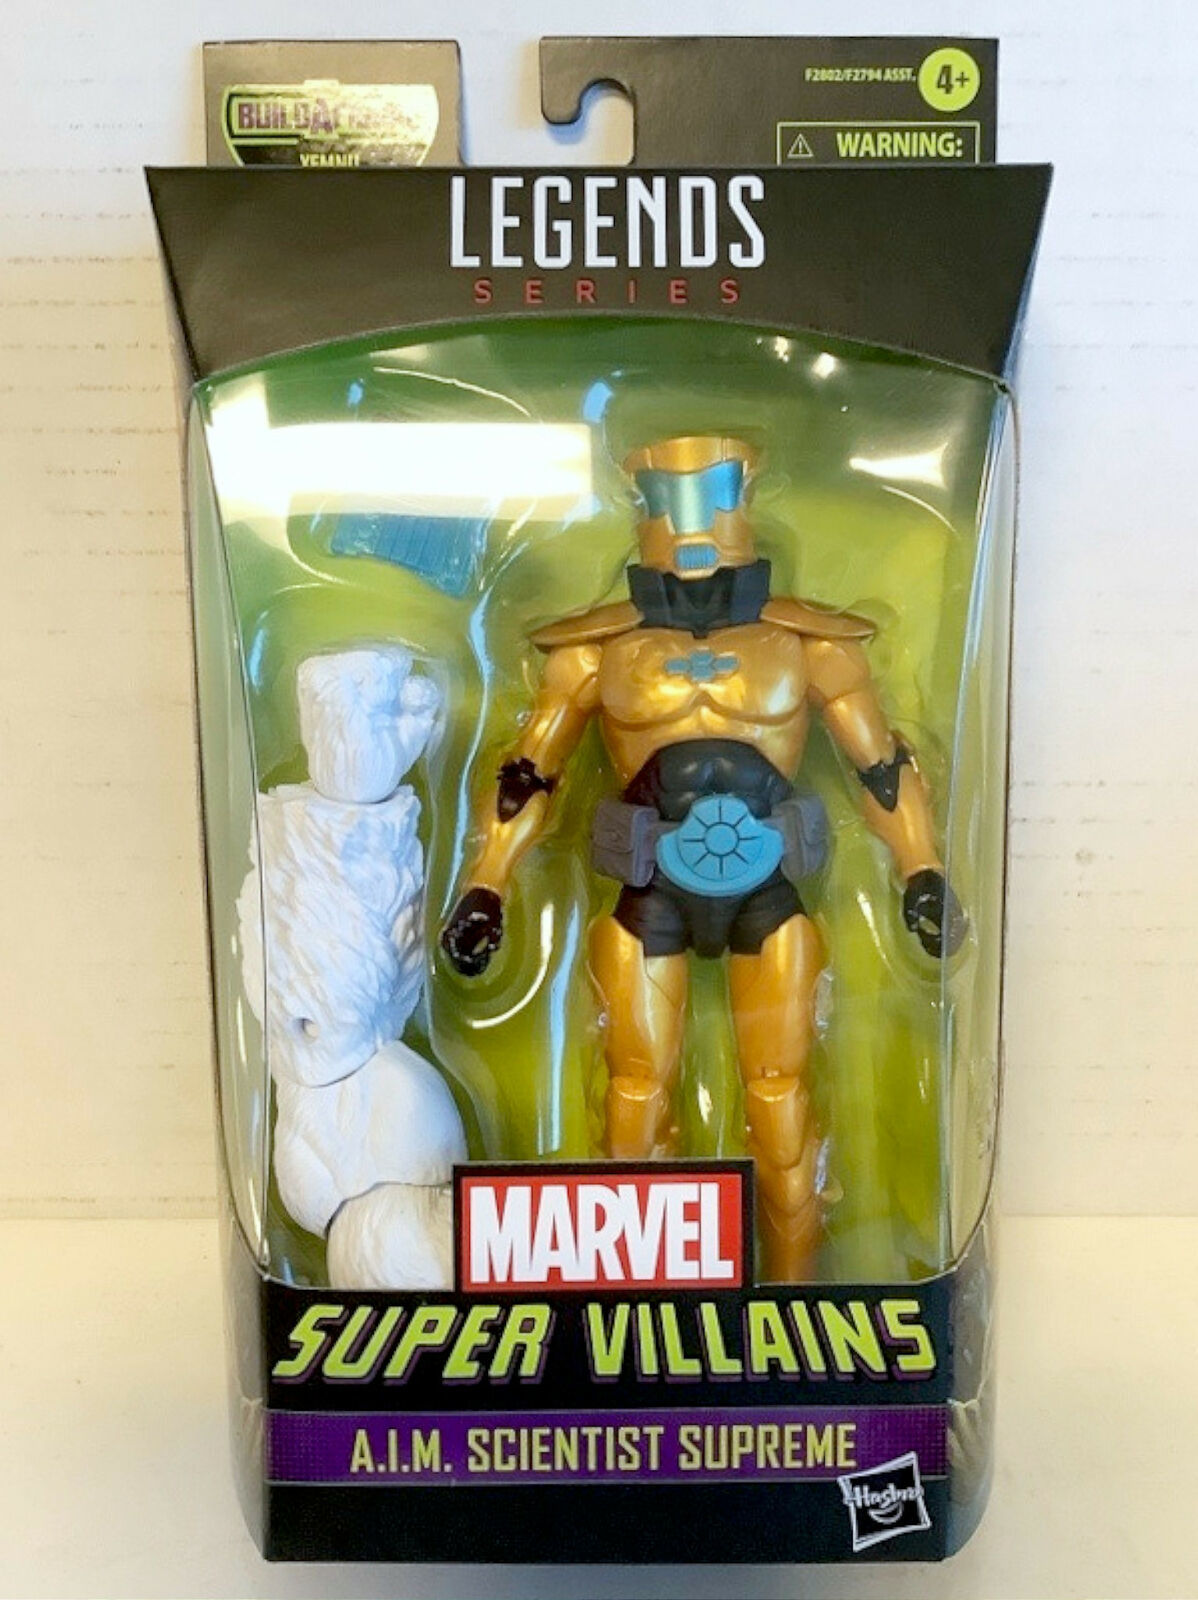 NEW Hasbro F2797 Marvel Legends Super Villain A.I.M. SCIENTIST SUPREME 6" Figure - $30.99